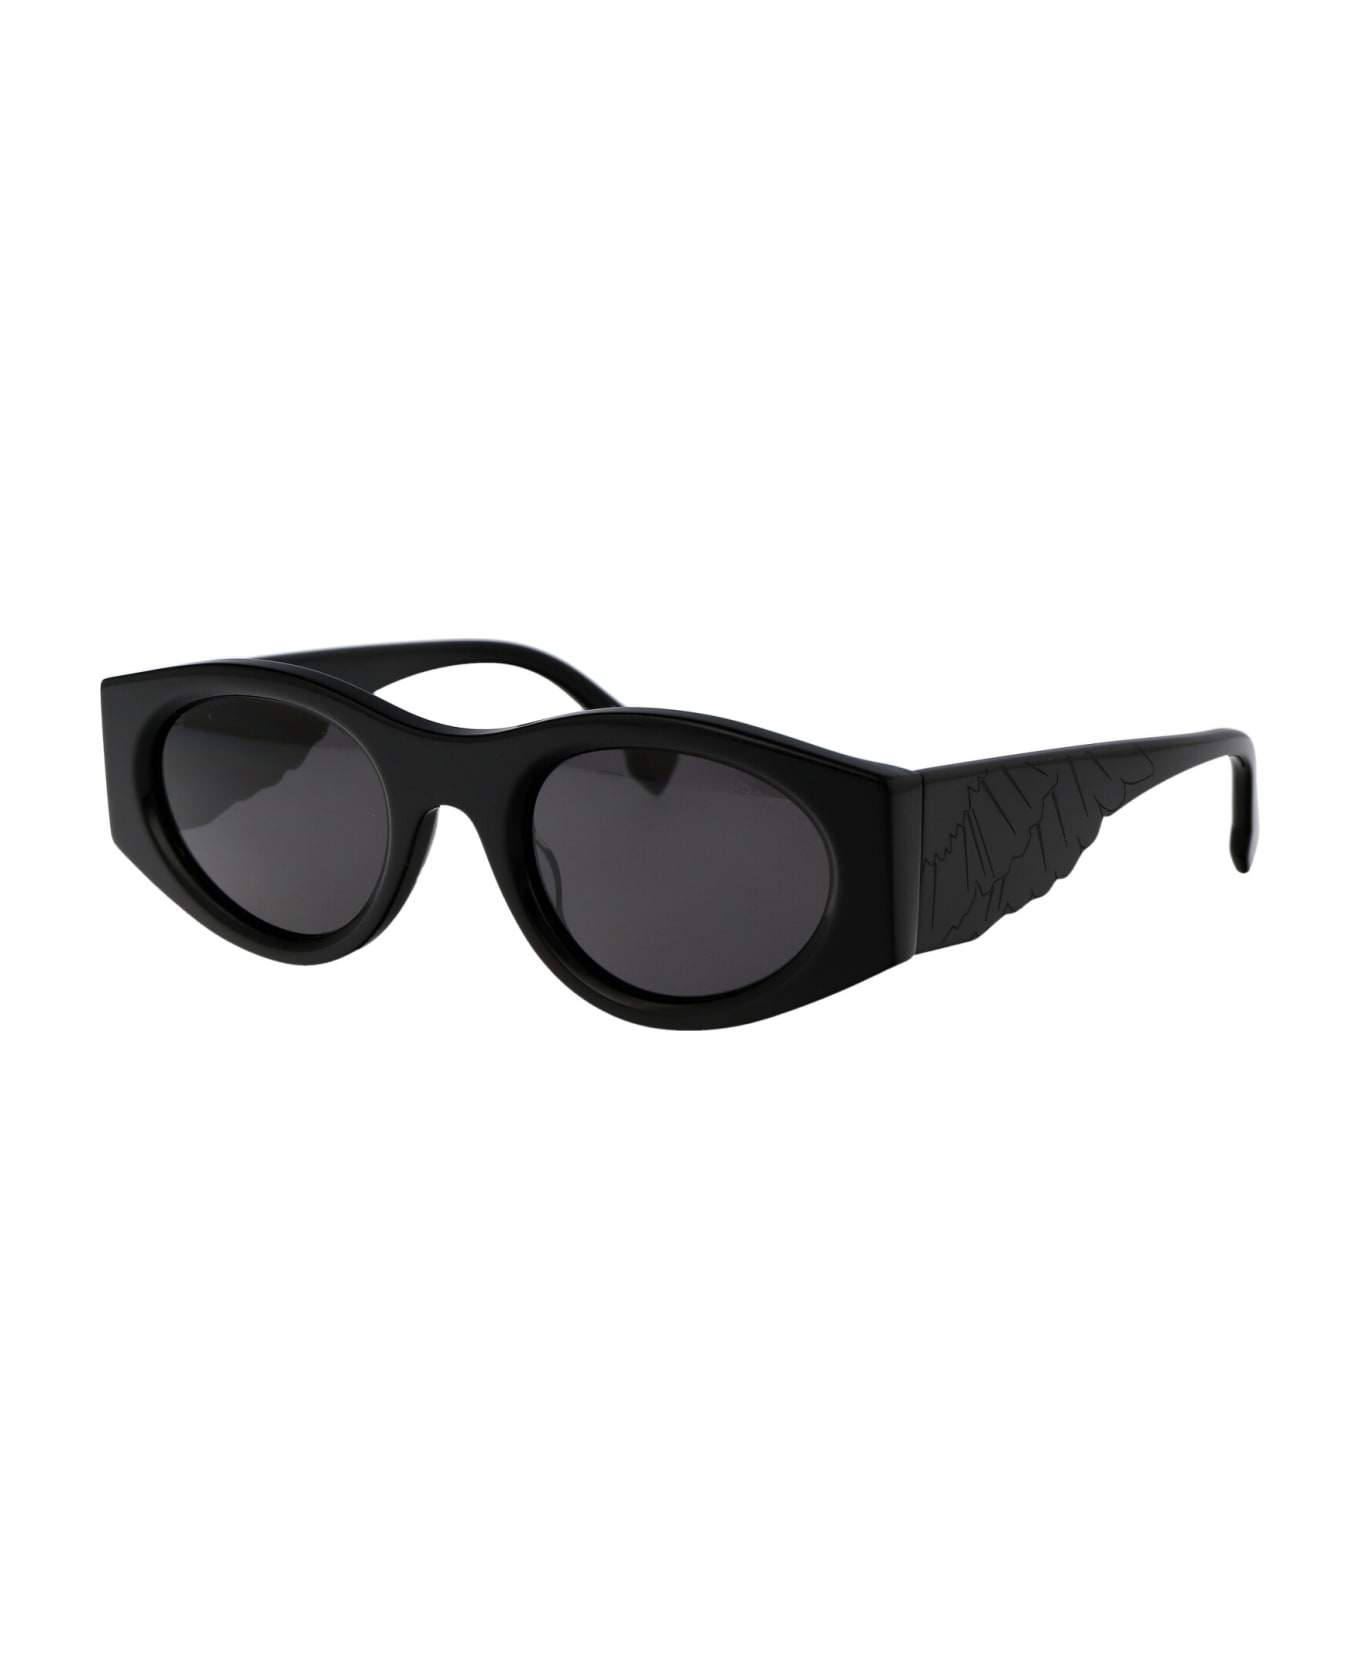 Marcelo Burlon Pasithea 021 Sunglasses - 1007 BLACK サングラス